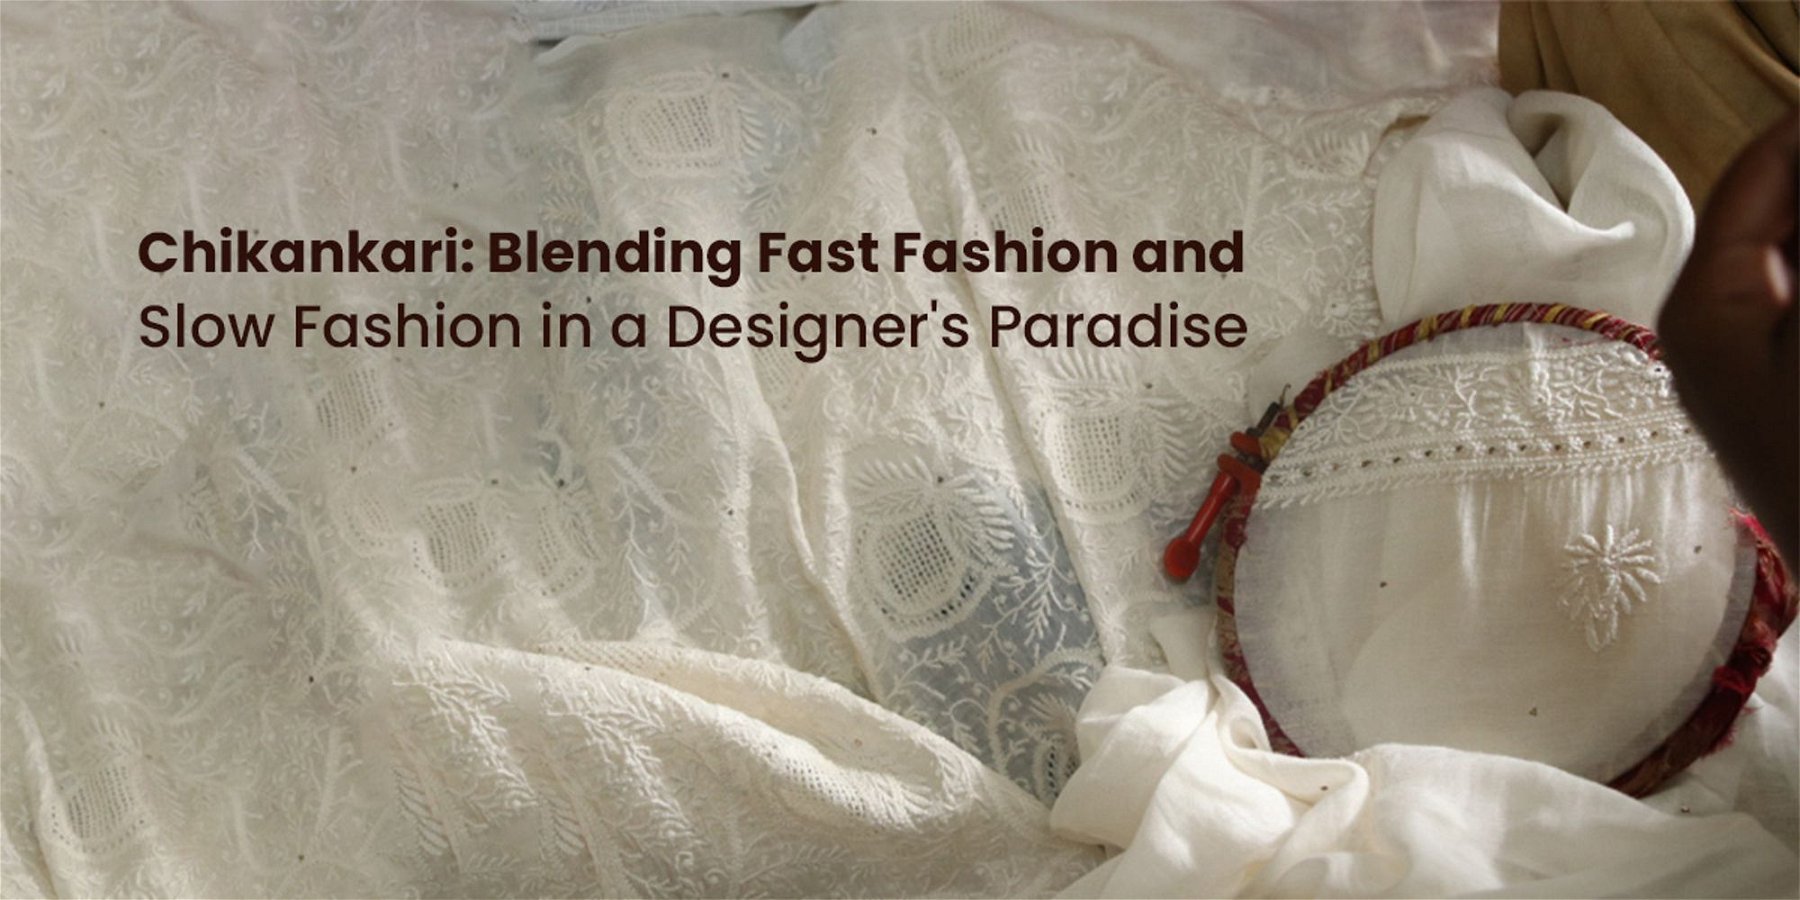 Chikankari: Blending fast fashion and slow fashion in a designer's paradise